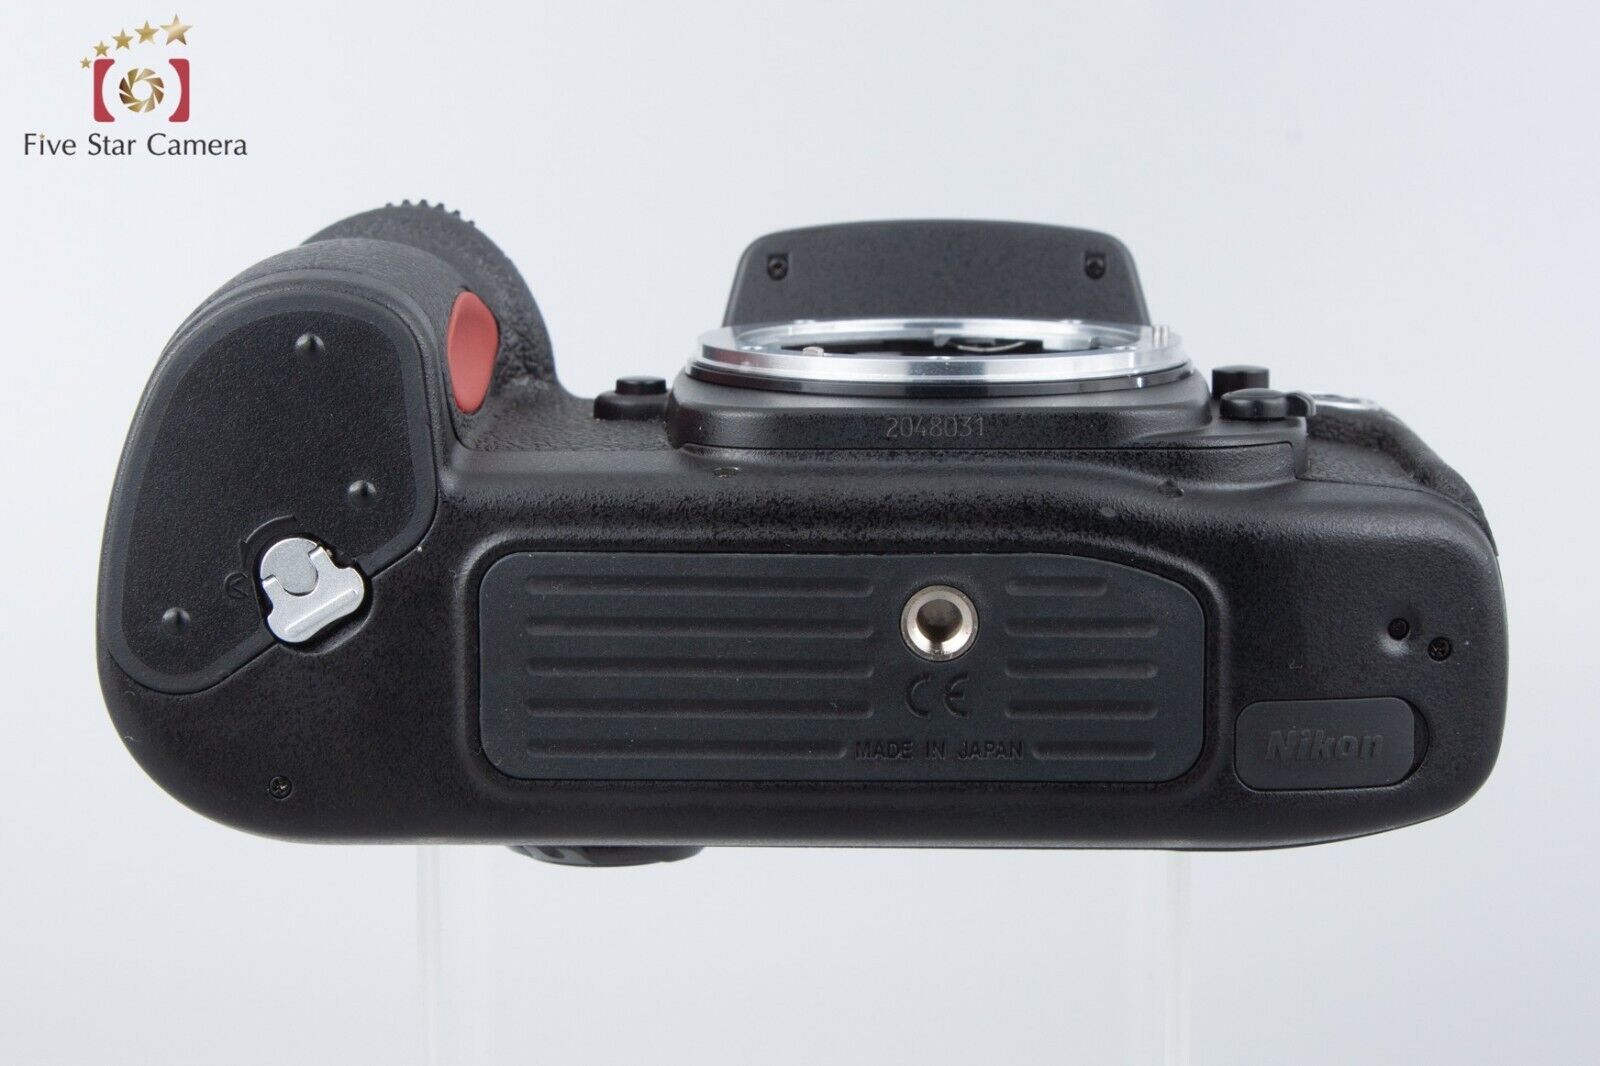 Very Good!! Nikon F100 35mm SLR Film Camera Body